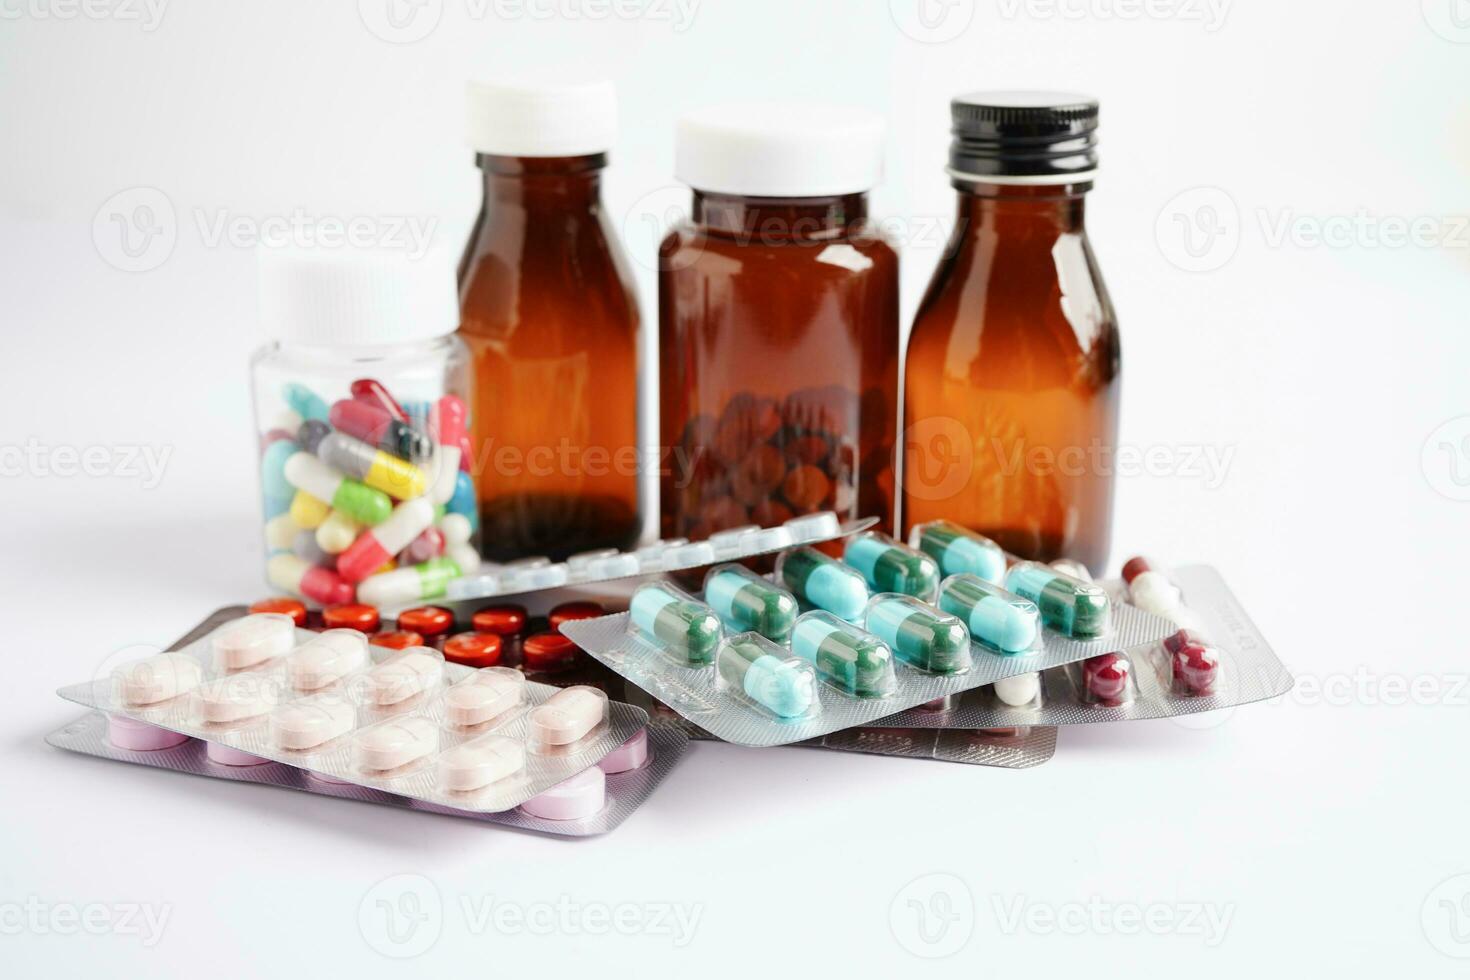 Droge Kapsel Pille von Droge Rezept im Drogerie, Apotheke zum Behandlung Gesundheit Medizin. foto